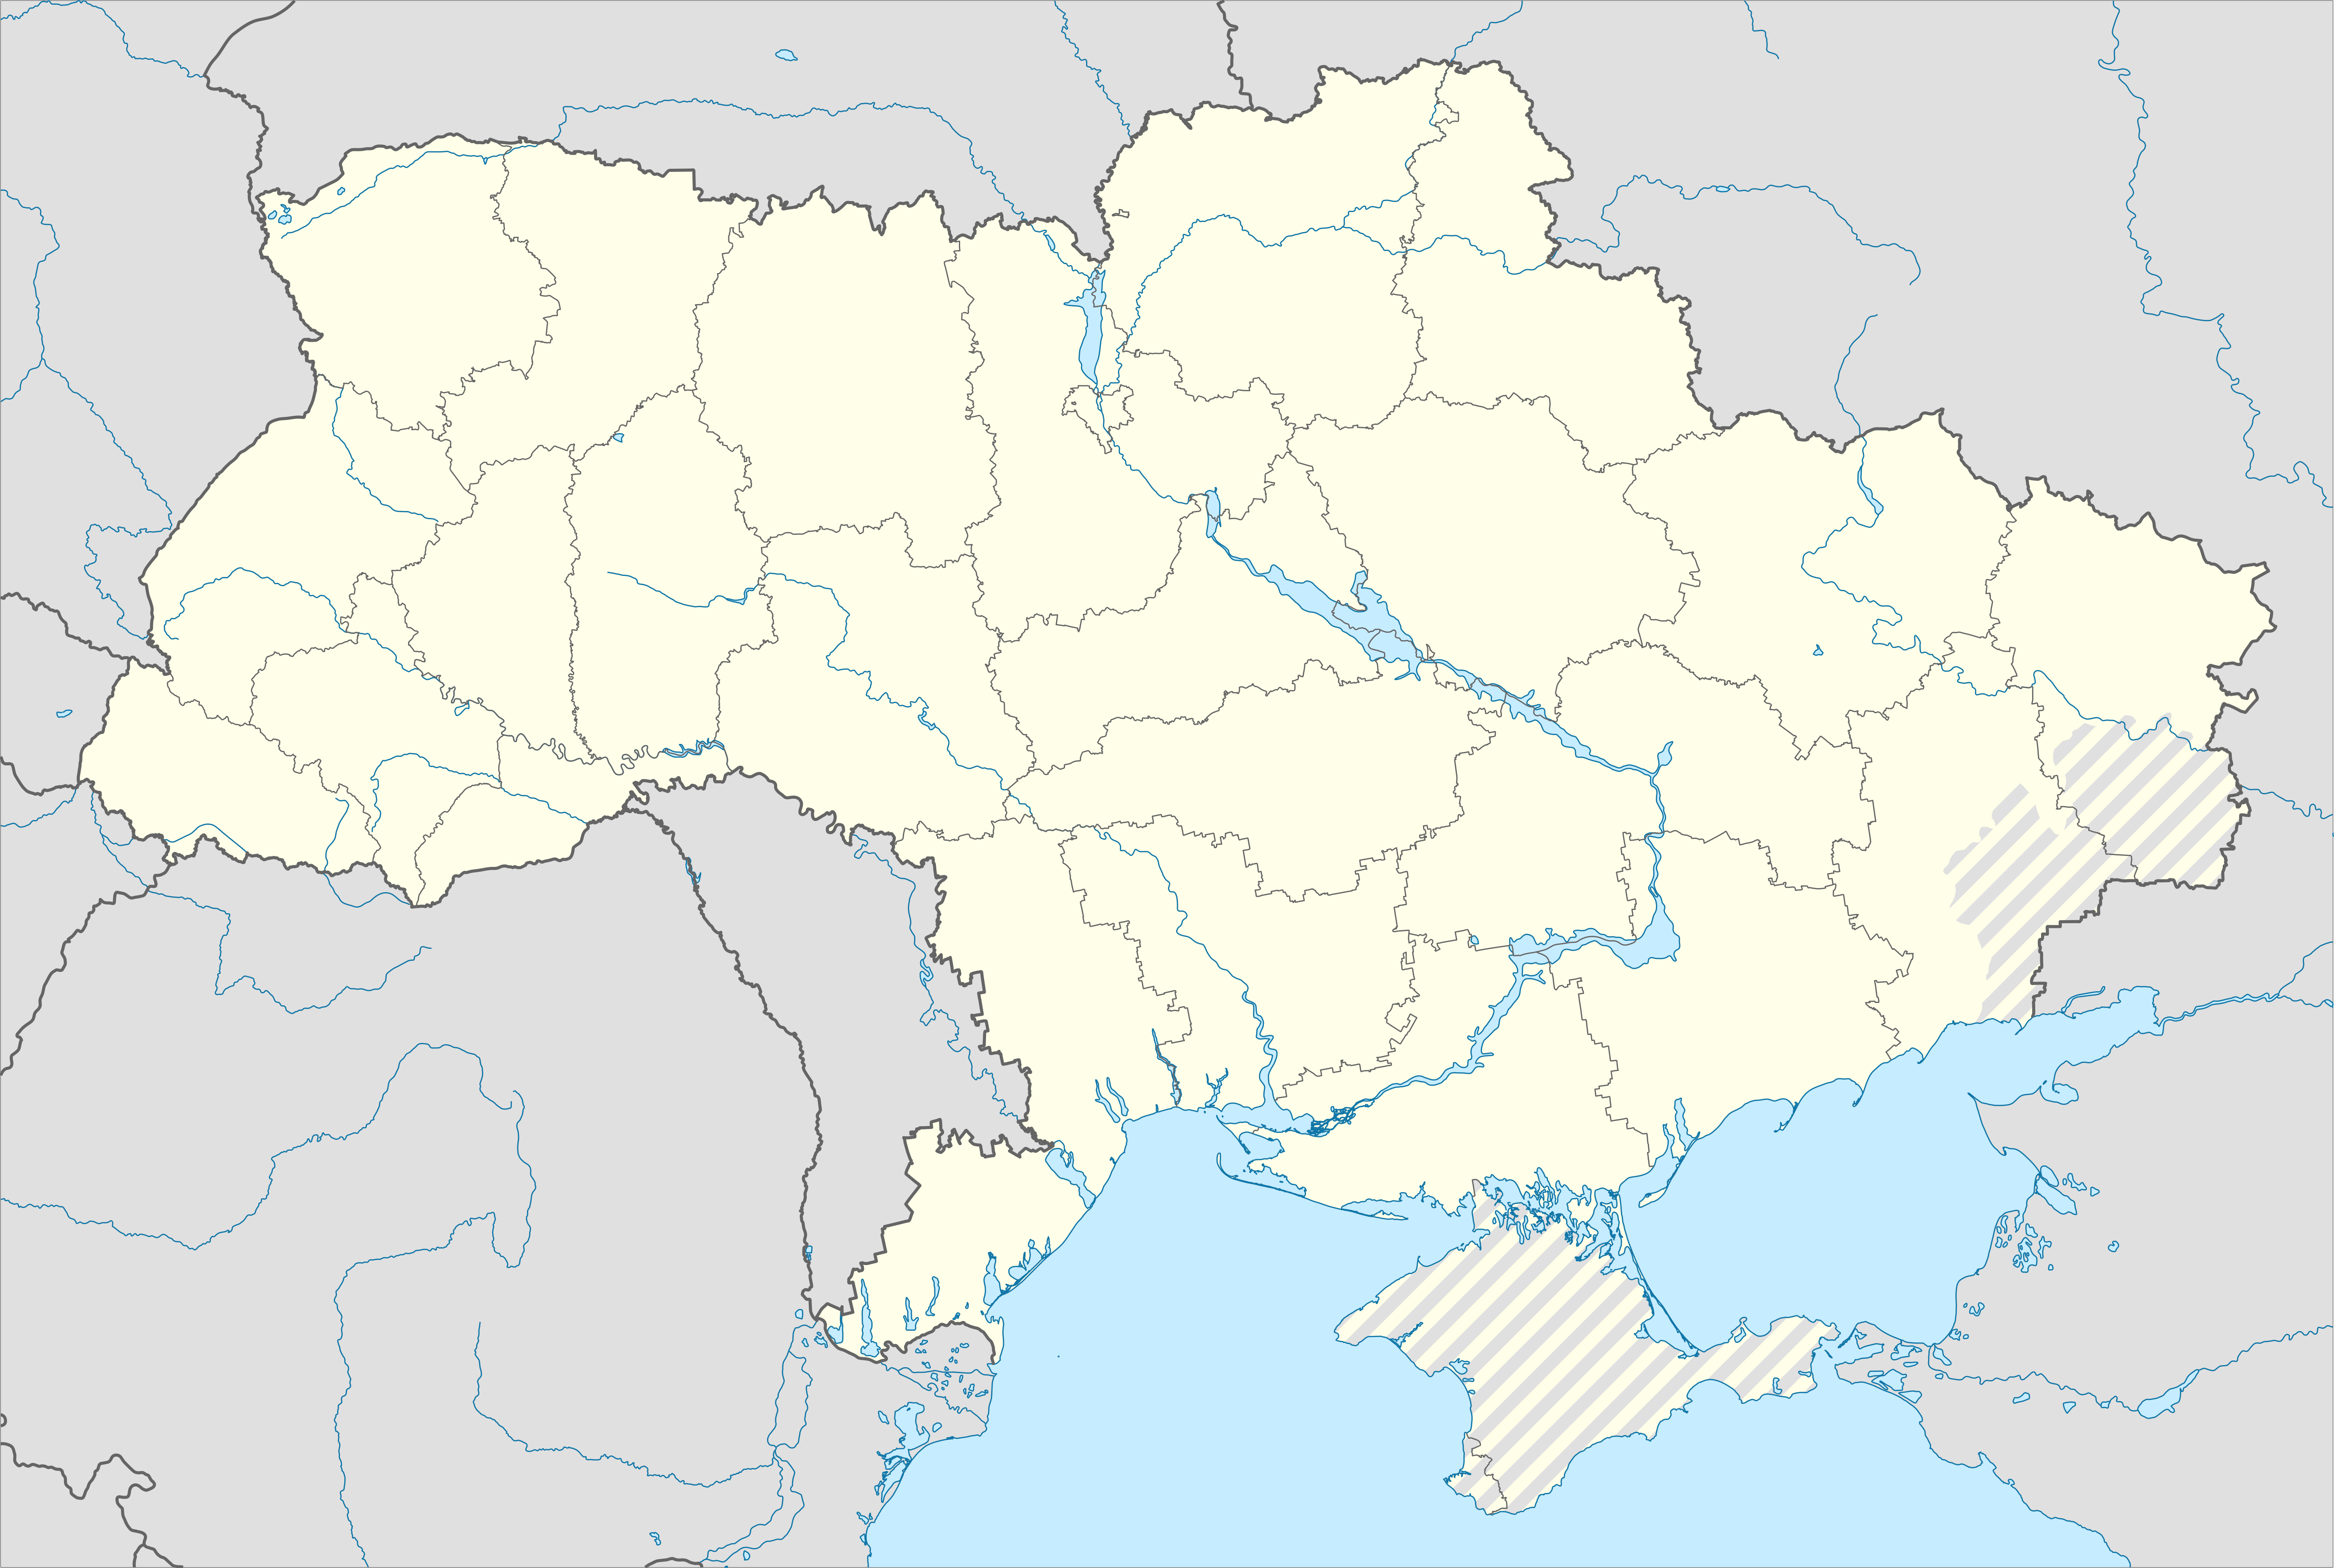 MarioJump83/sandbox is located in Ukraine